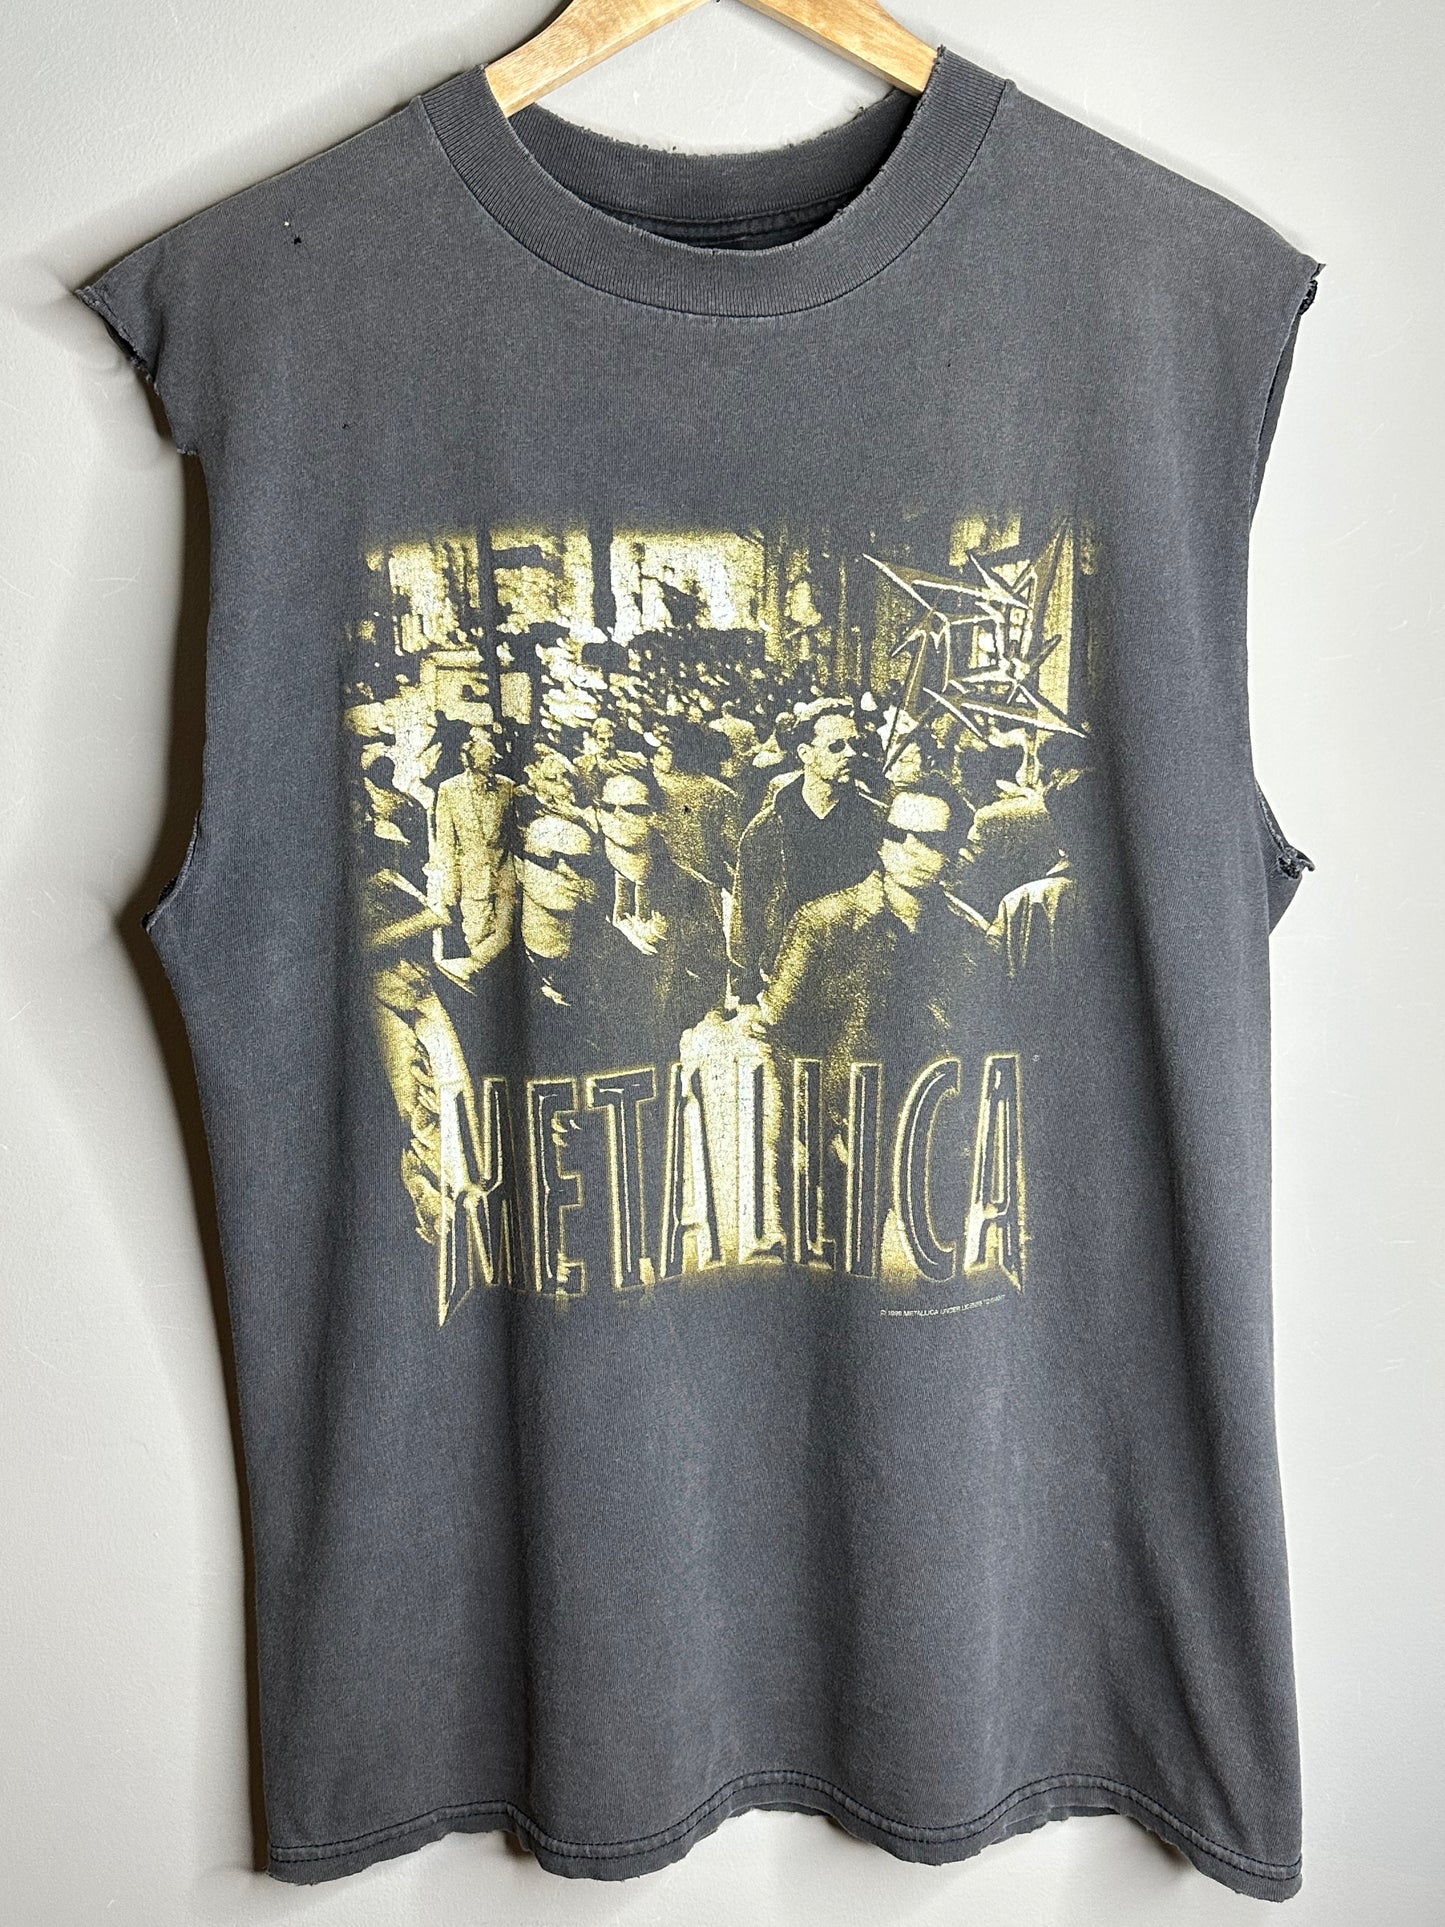 Vintage 1996 METALLICA  sleeveless cut t-shirt L